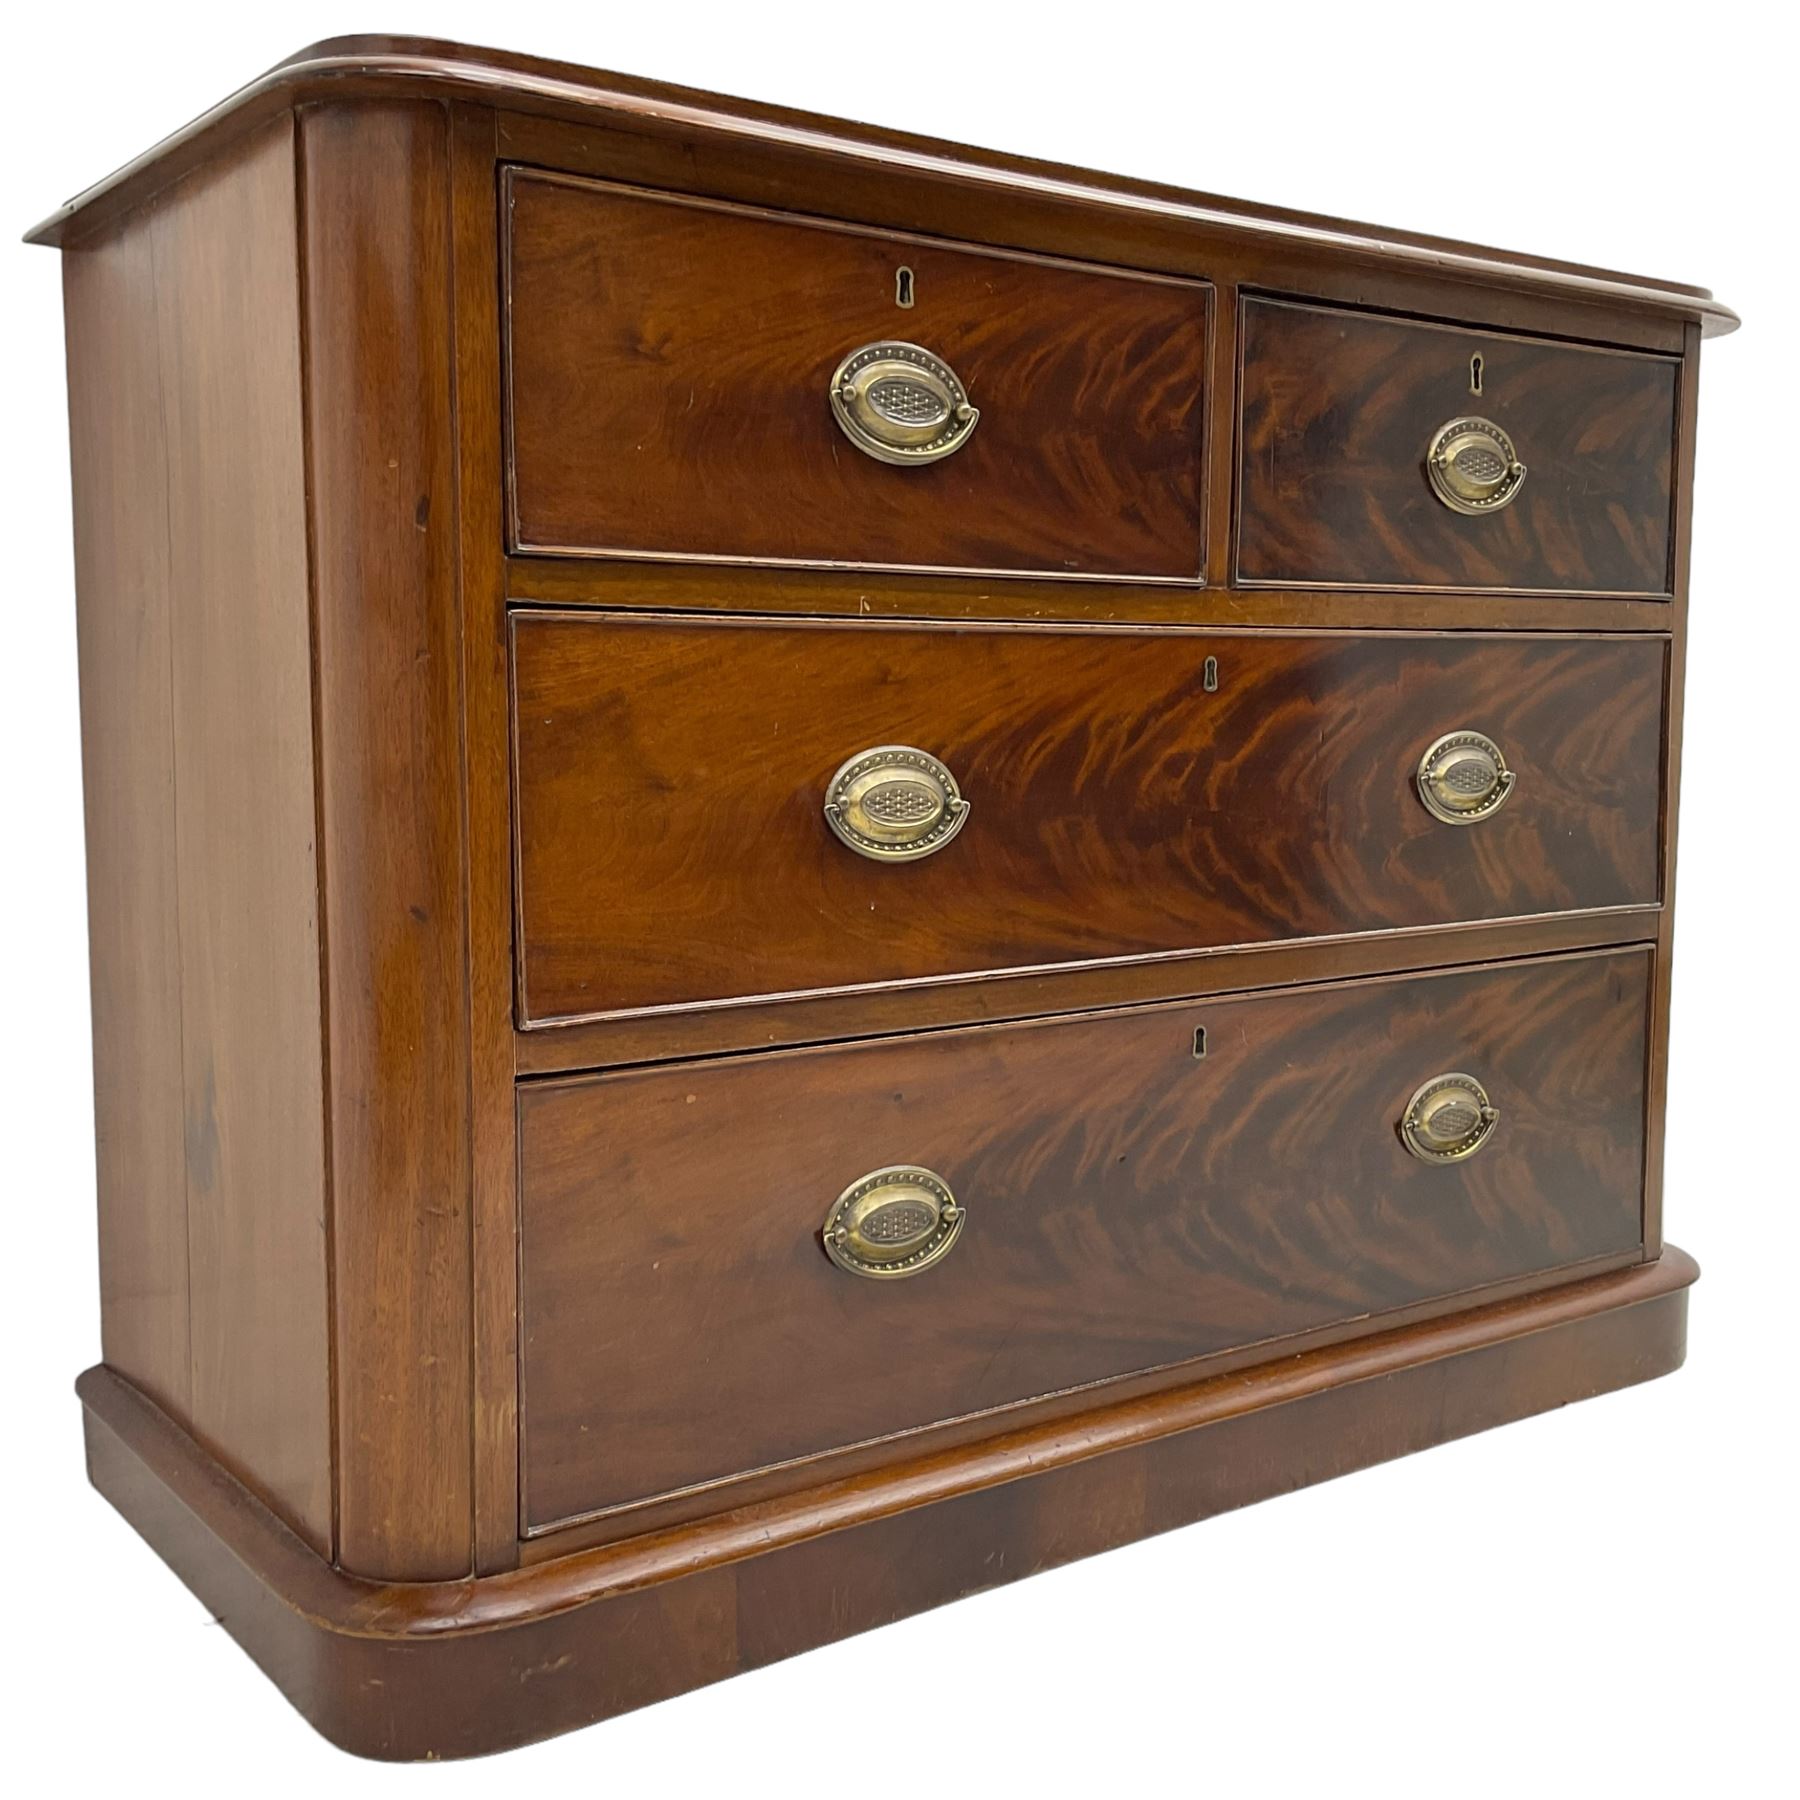 19th century walnut and mahogany chest - Image 6 of 7